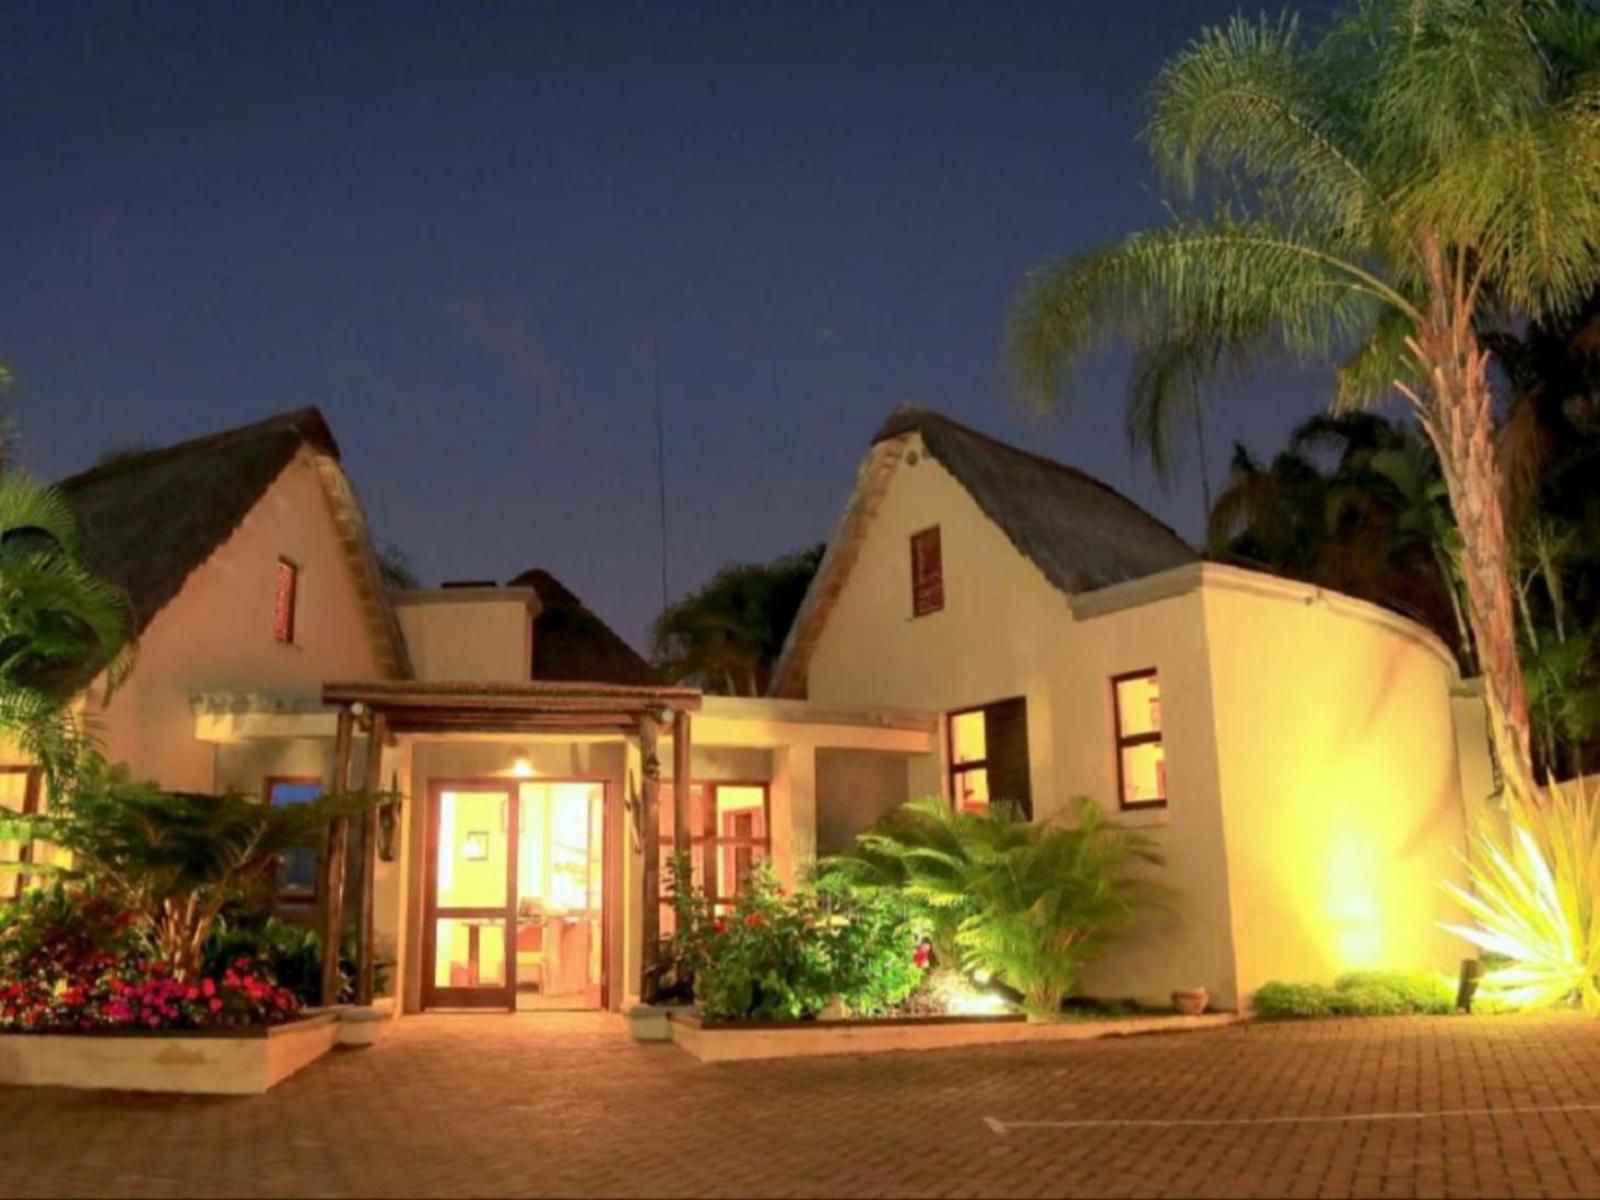 La Lechere Guest House Phalaborwa Limpopo Province South Africa House, Building, Architecture, Palm Tree, Plant, Nature, Wood